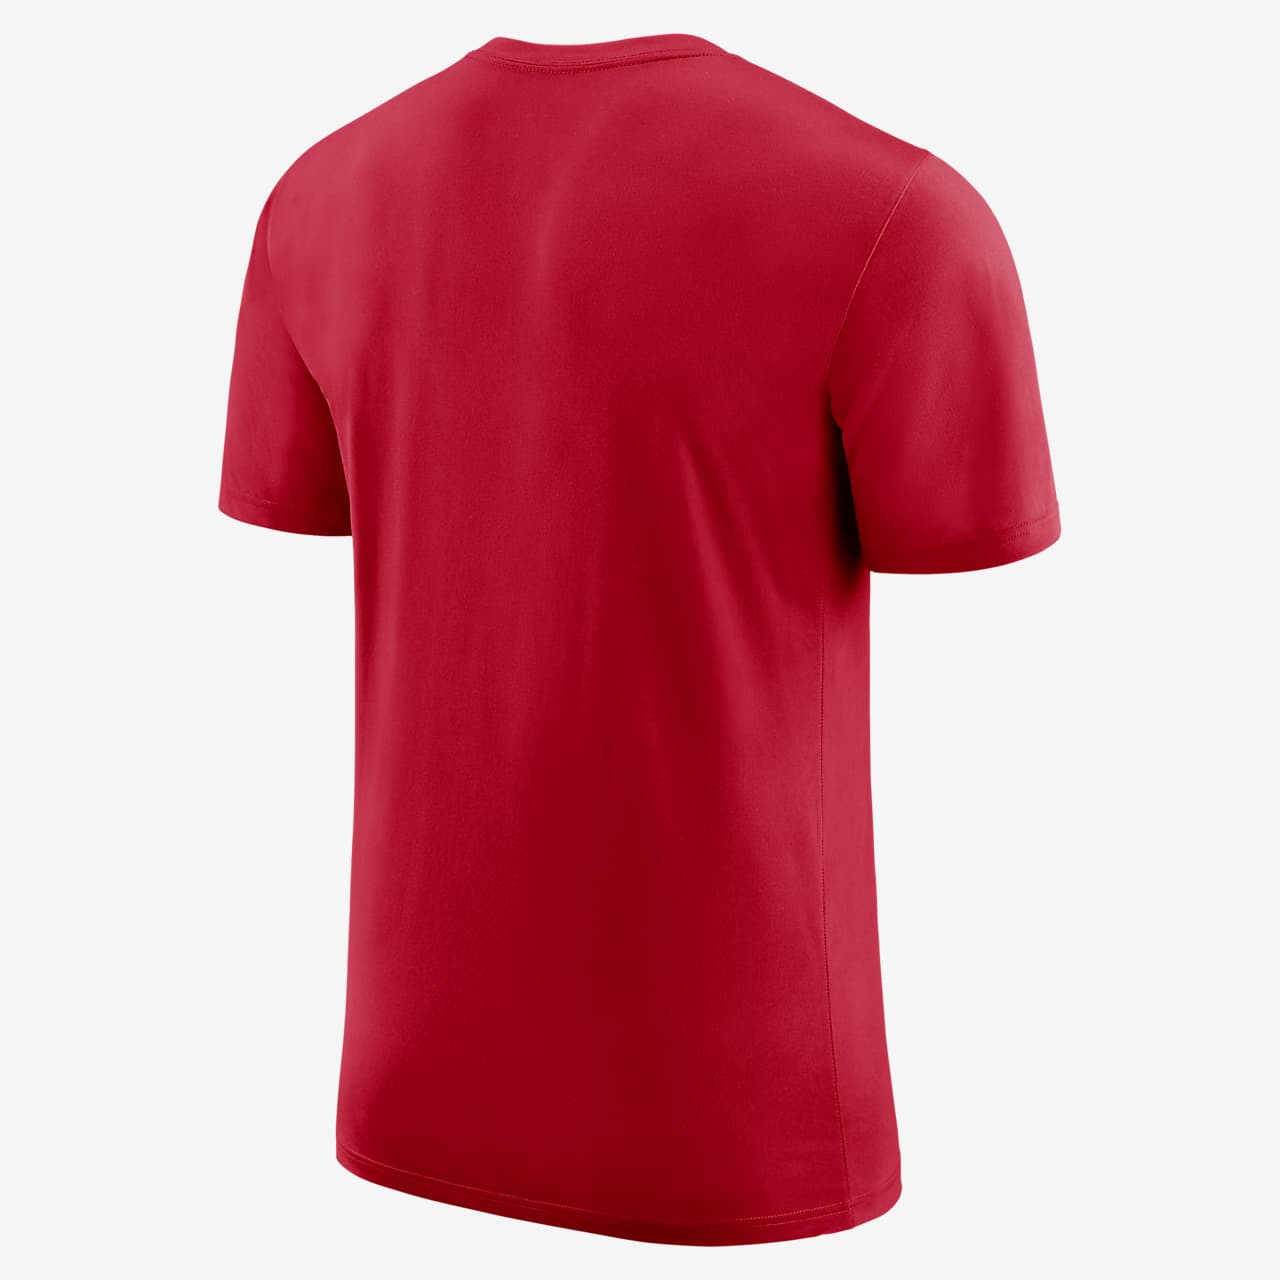 Chicago Bulls Nike Dri-FIT Men's NBA T-Shirt.